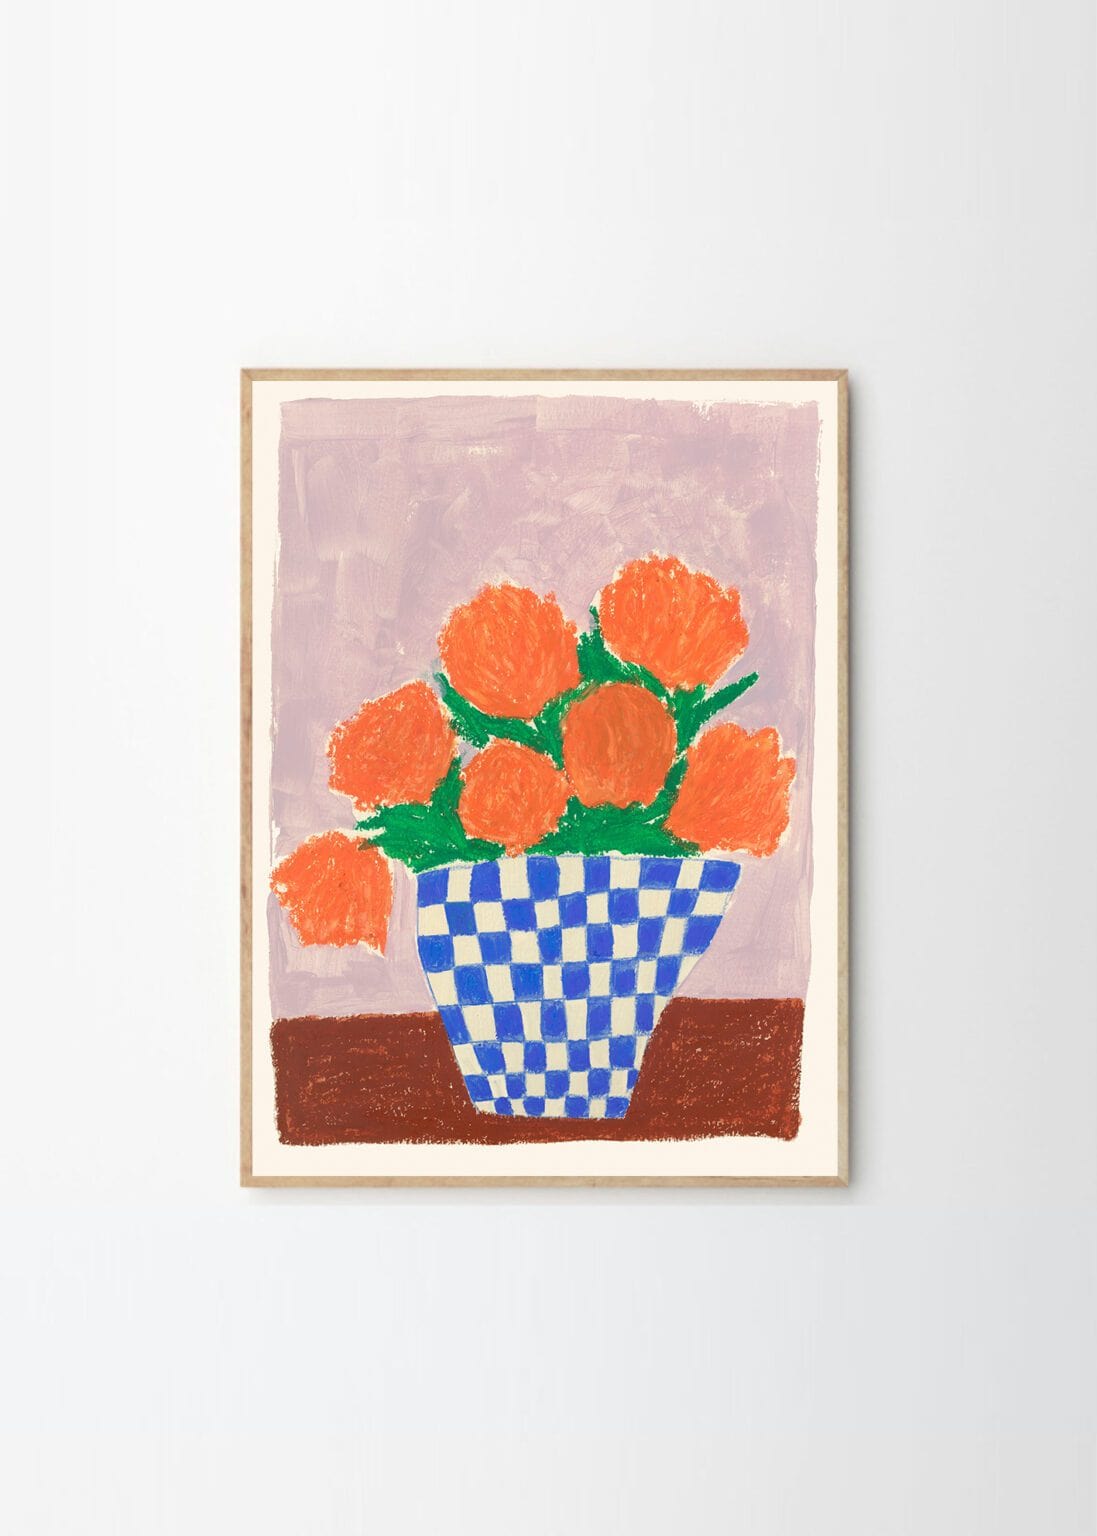 THE POSTER CLUB Poster Πόστερ, Orange Flowers, Carla Llanos, (50x70) cm, Πορτοκαλί/Μπλε, Sustainable Paper,THE POSTER CLUB